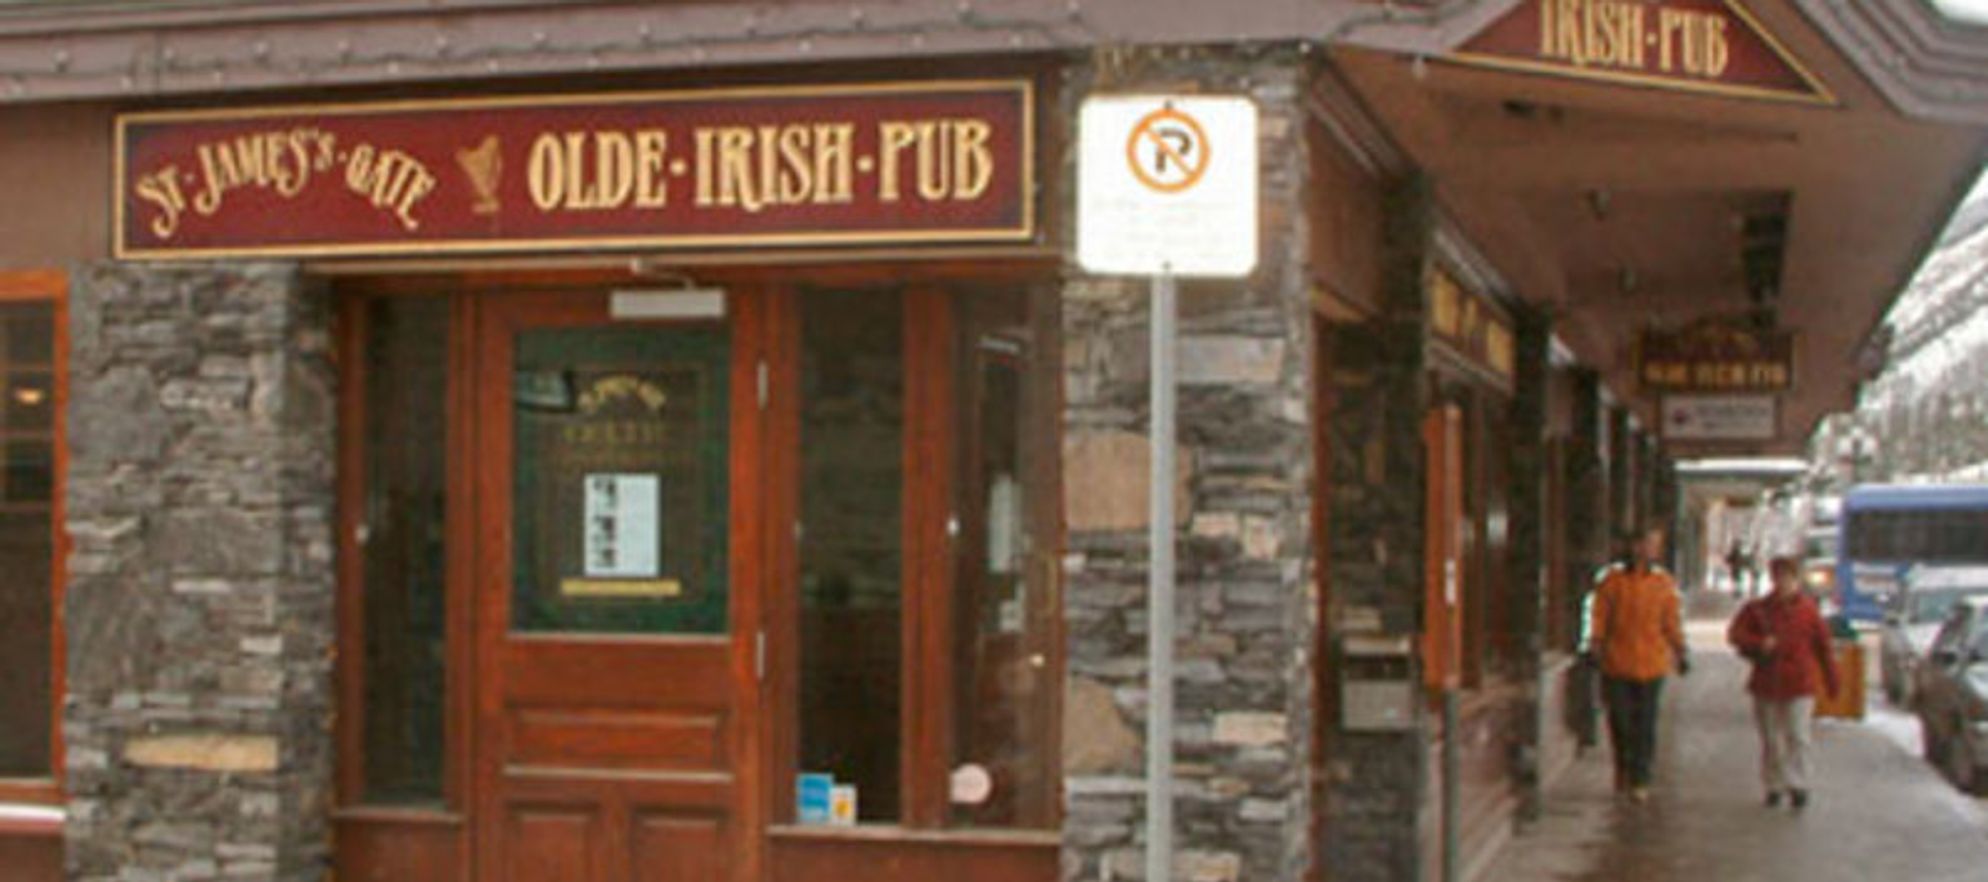 St. James's Gate Olde Irish Pub